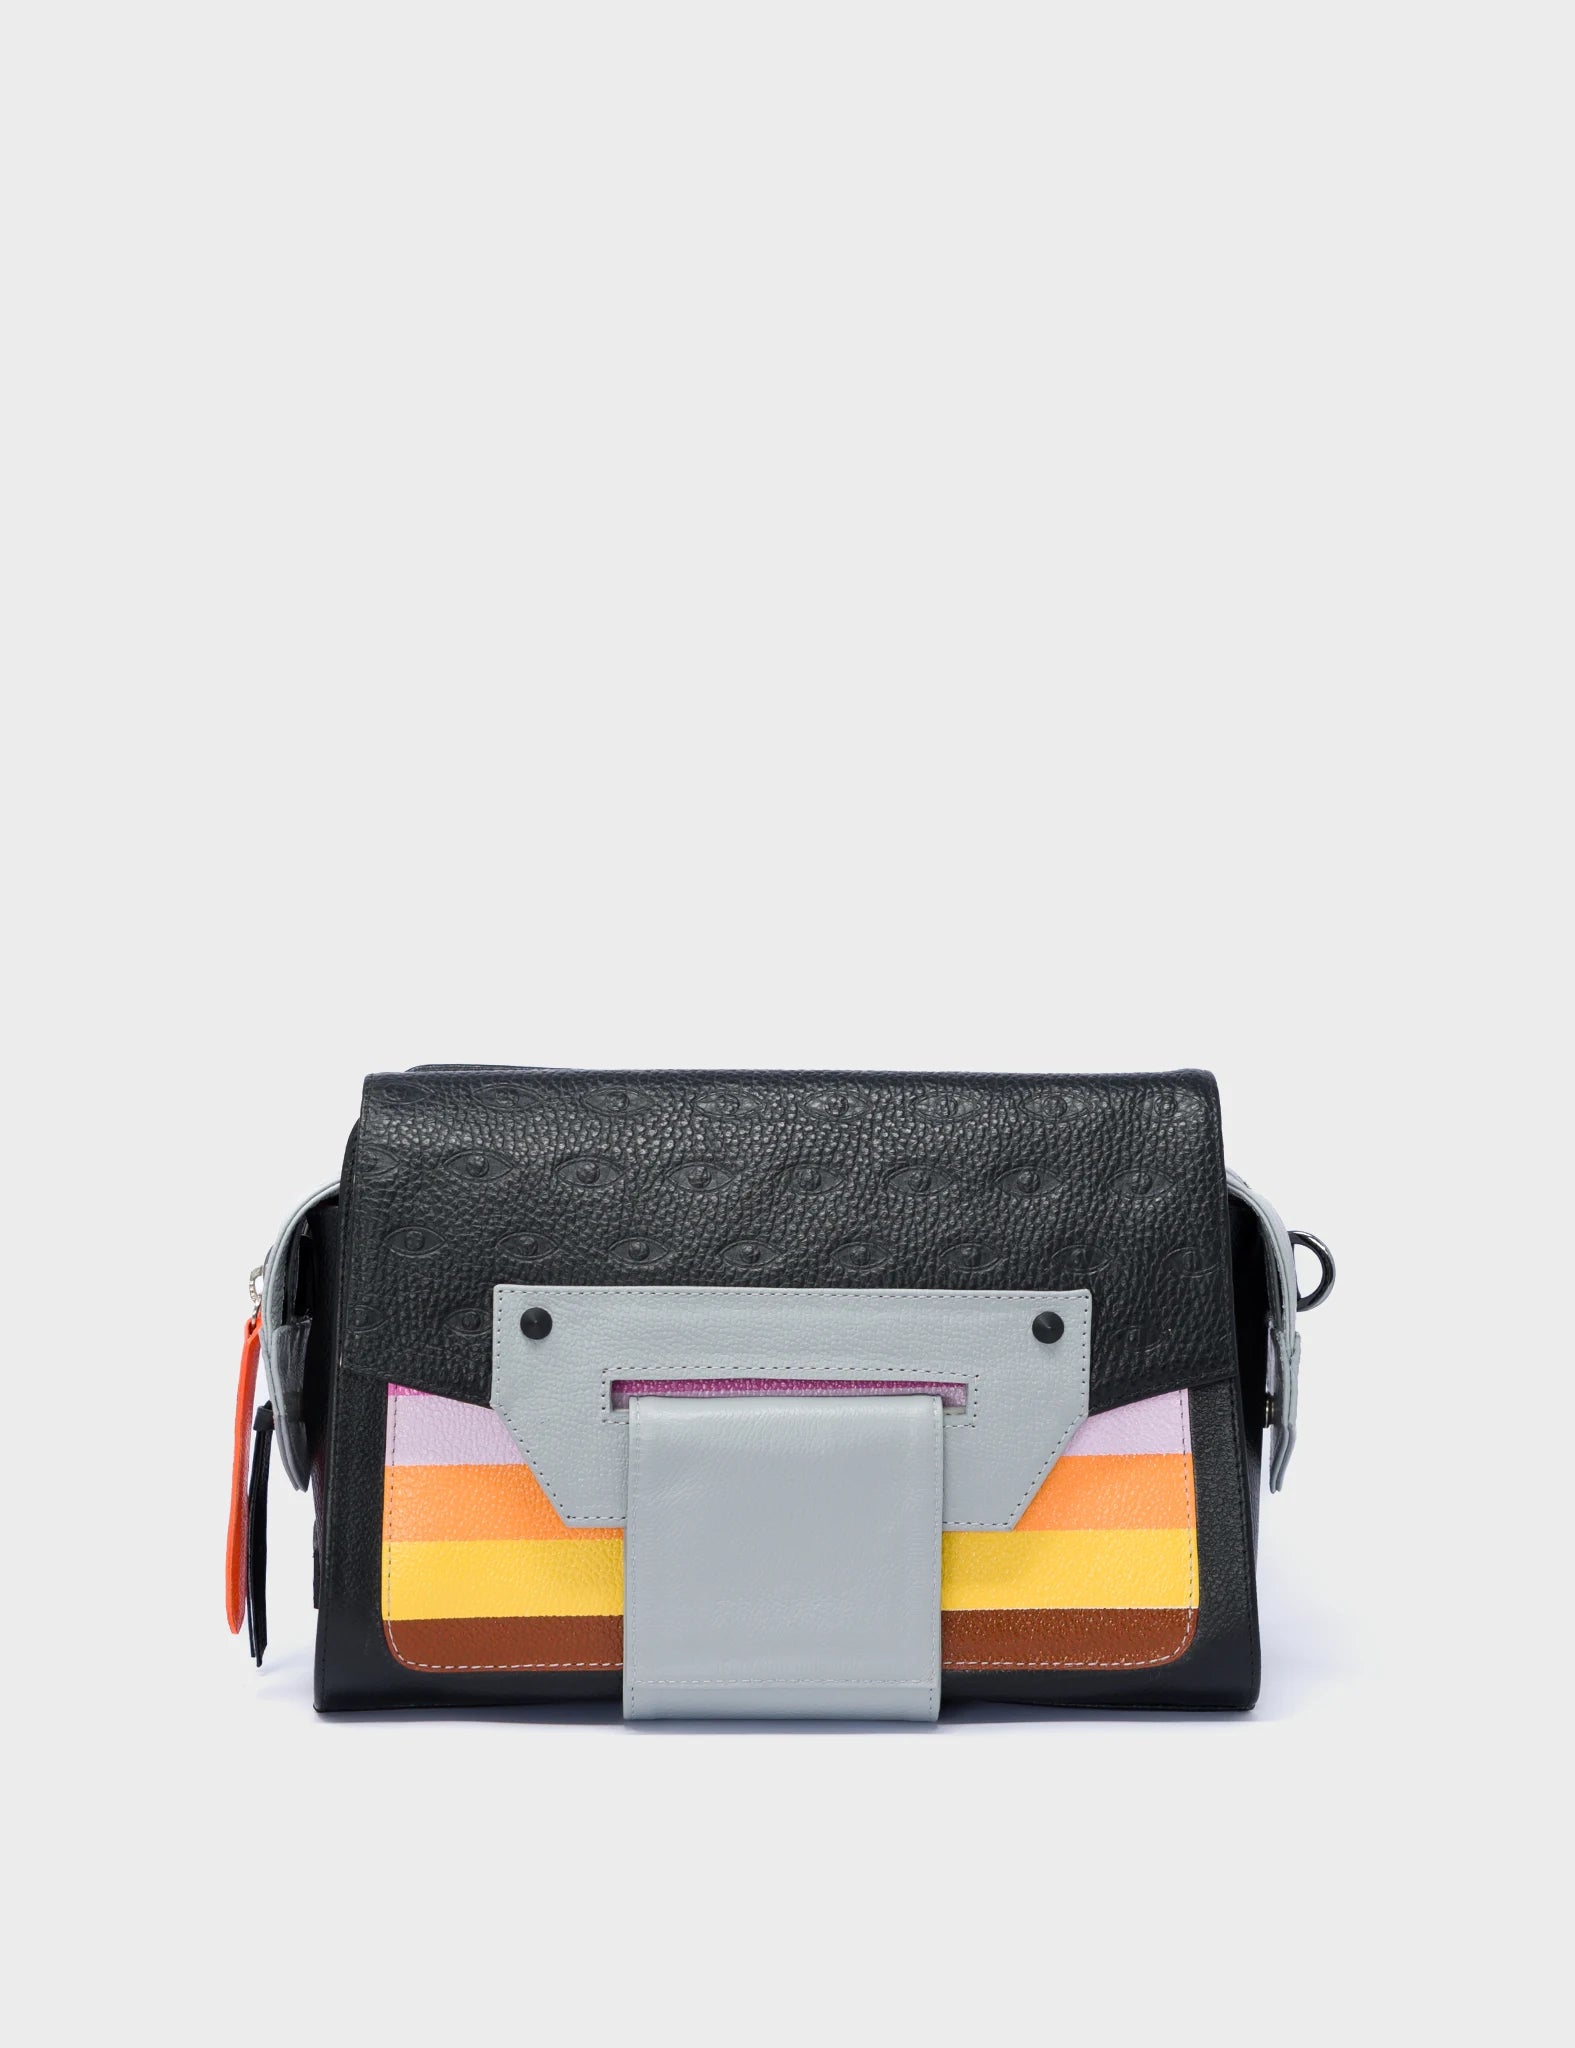 Cael Reversible Black And Grey Shoulder Bag - Groovy Rainbow Design - Front 